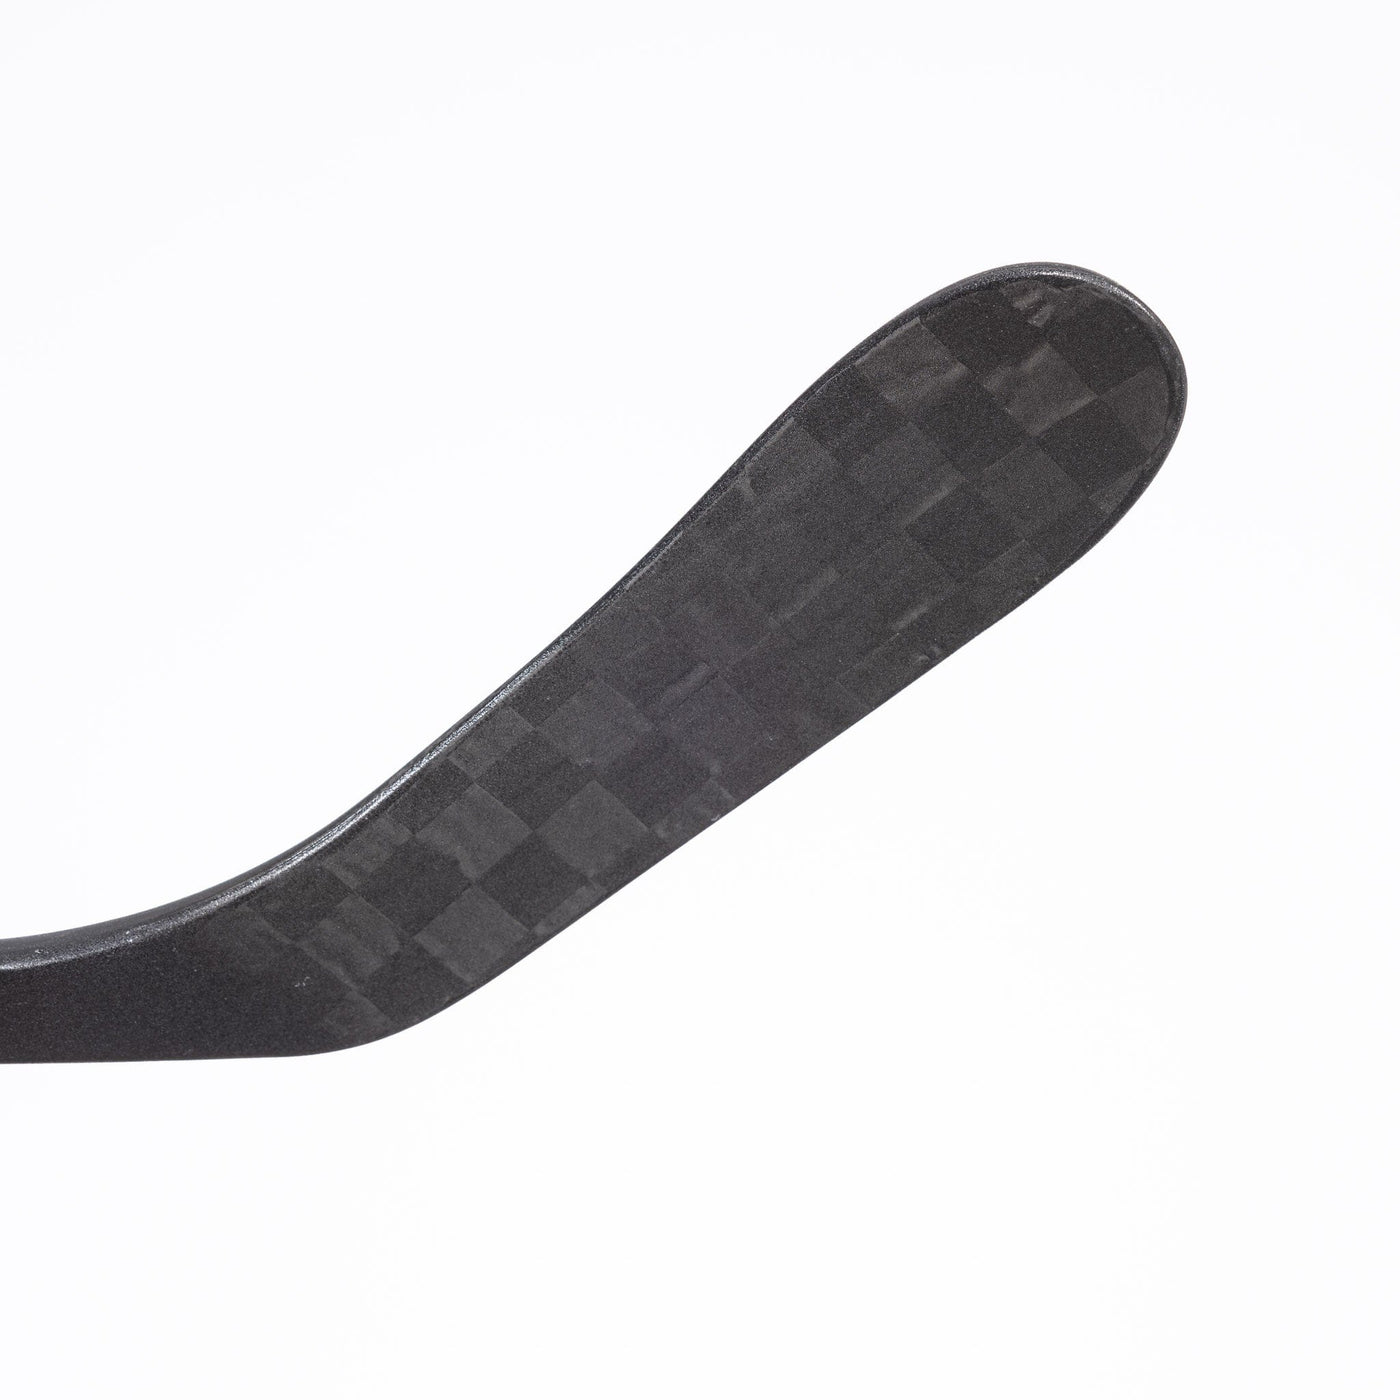 TRUE Catalyst Pro Junior Hockey Stick - 50 Flex - The Hockey Shop Source For Sports